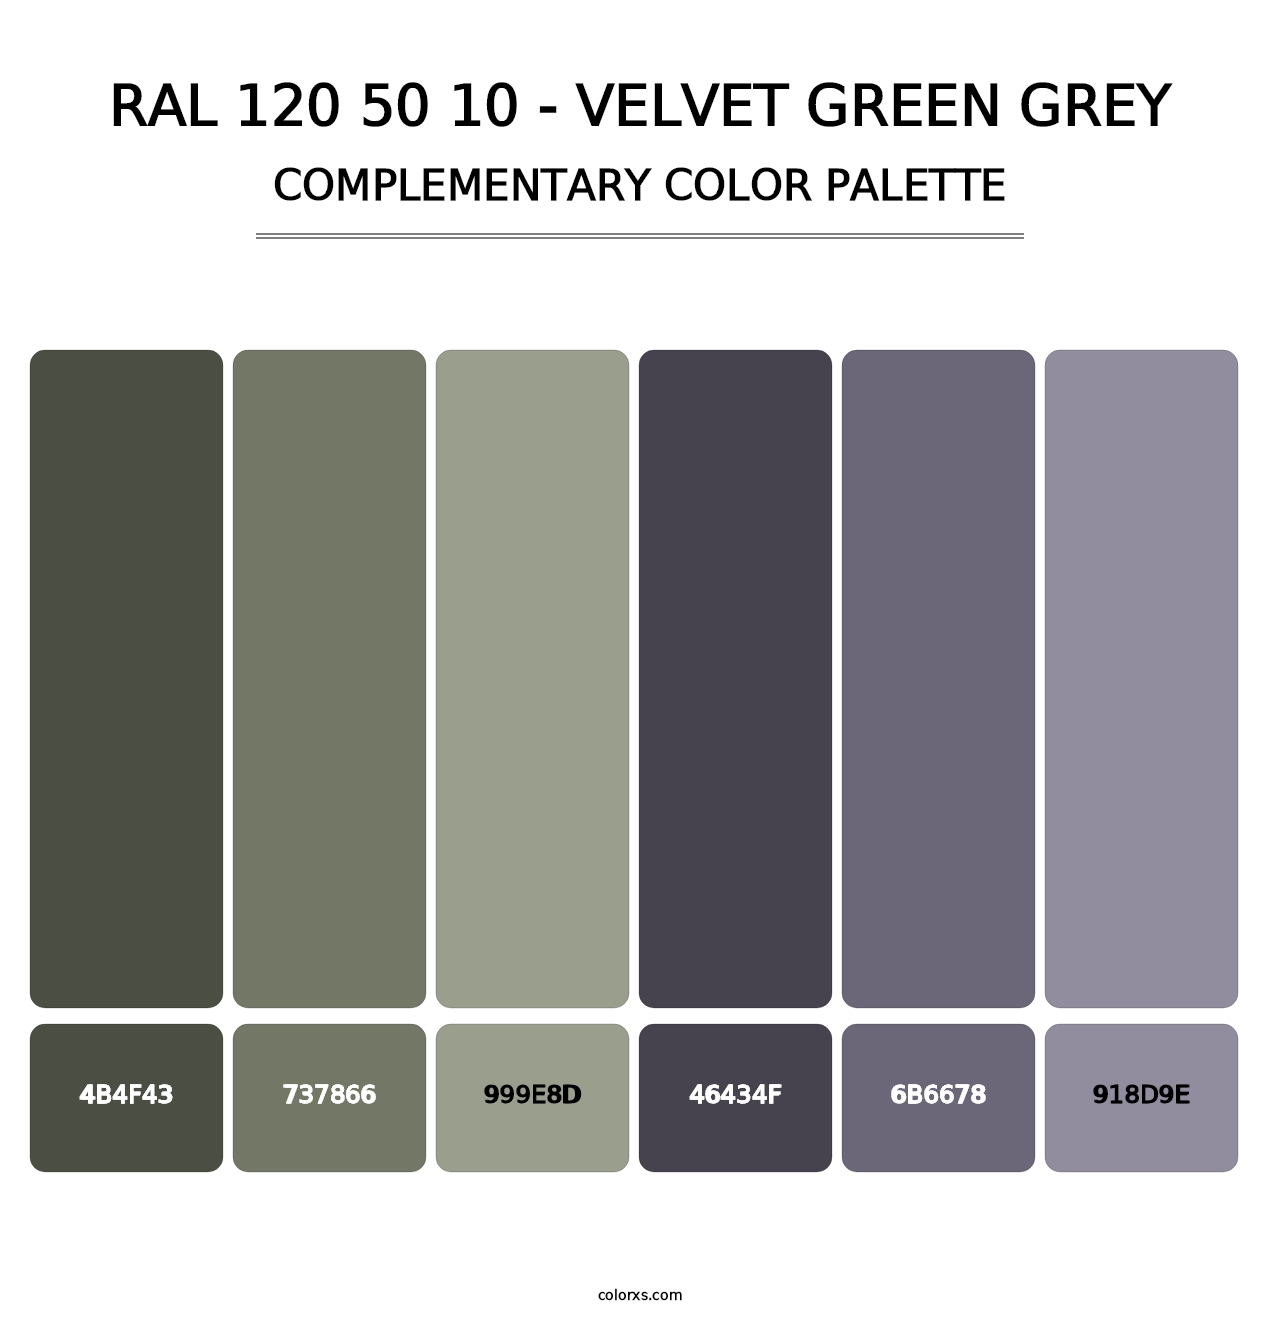 RAL 120 50 10 - Velvet Green Grey - Complementary Color Palette